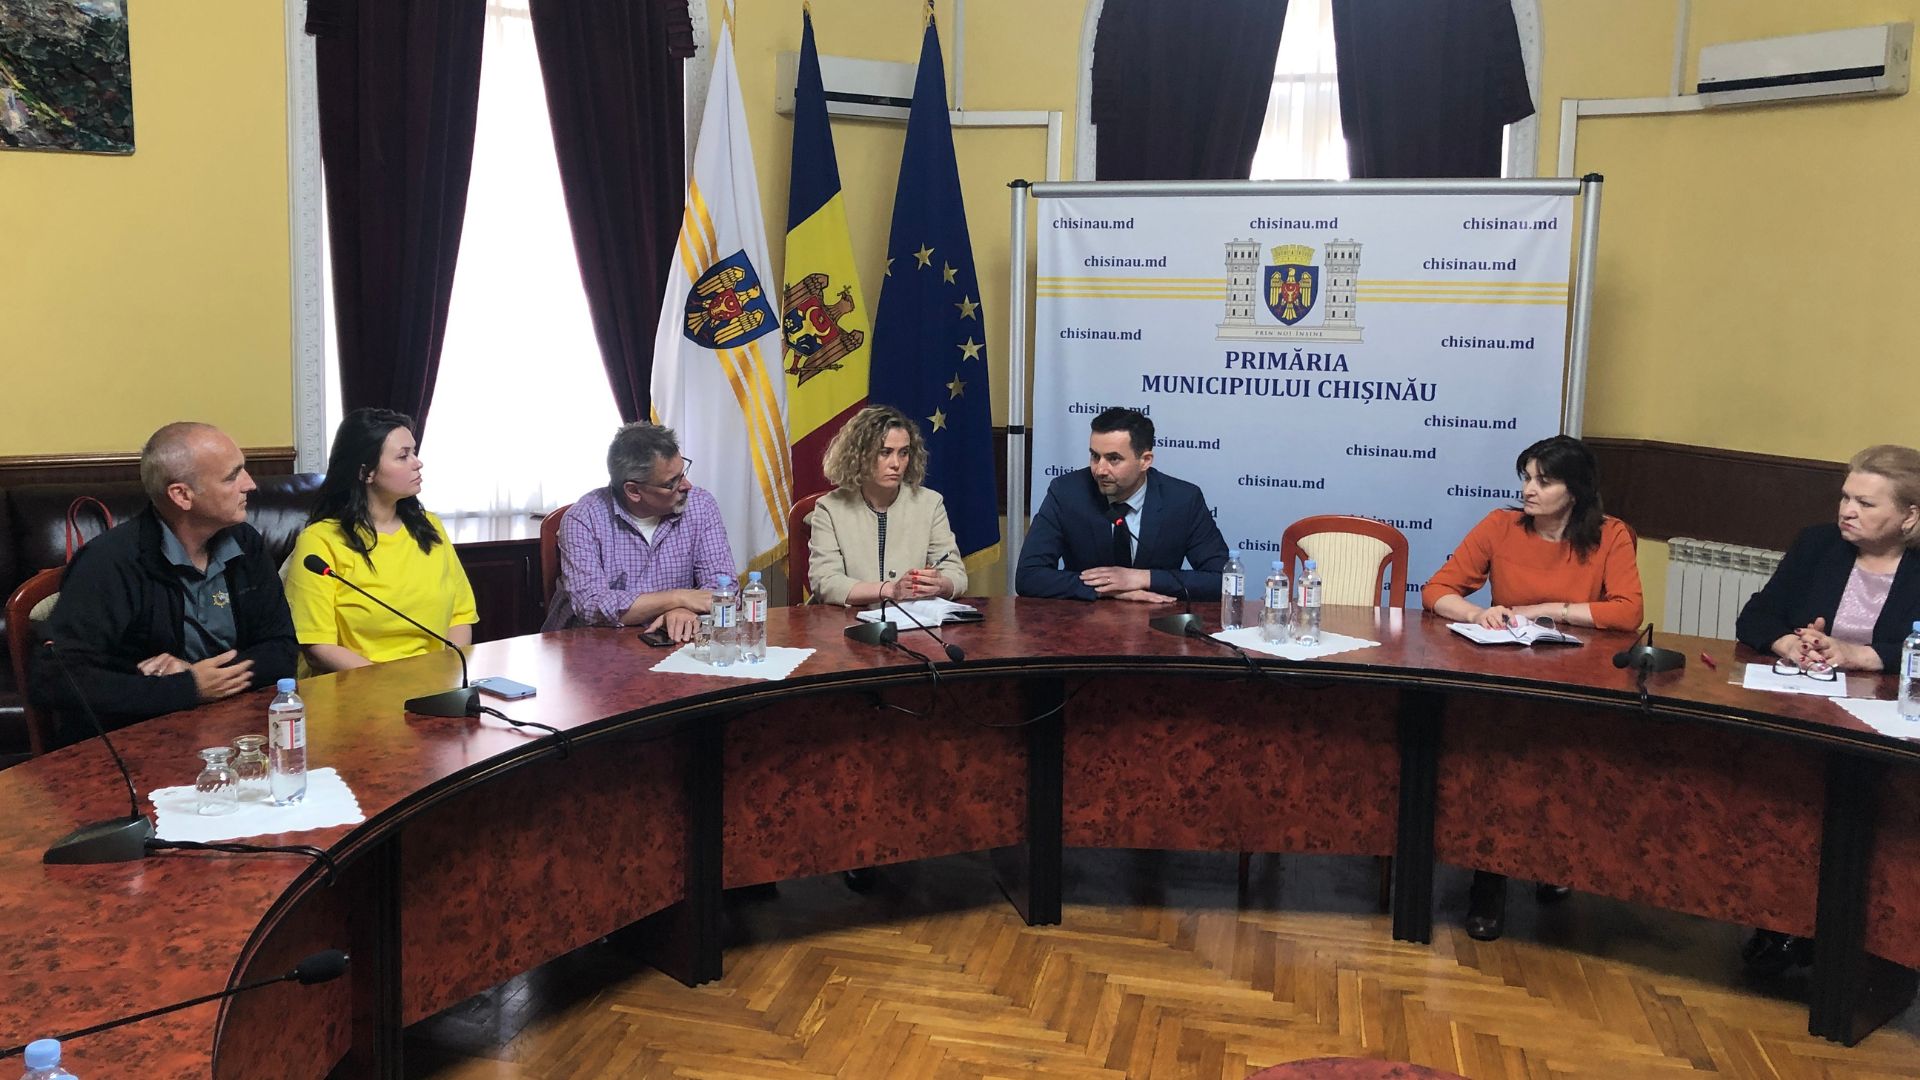 Town Hall meeting in Chisinau